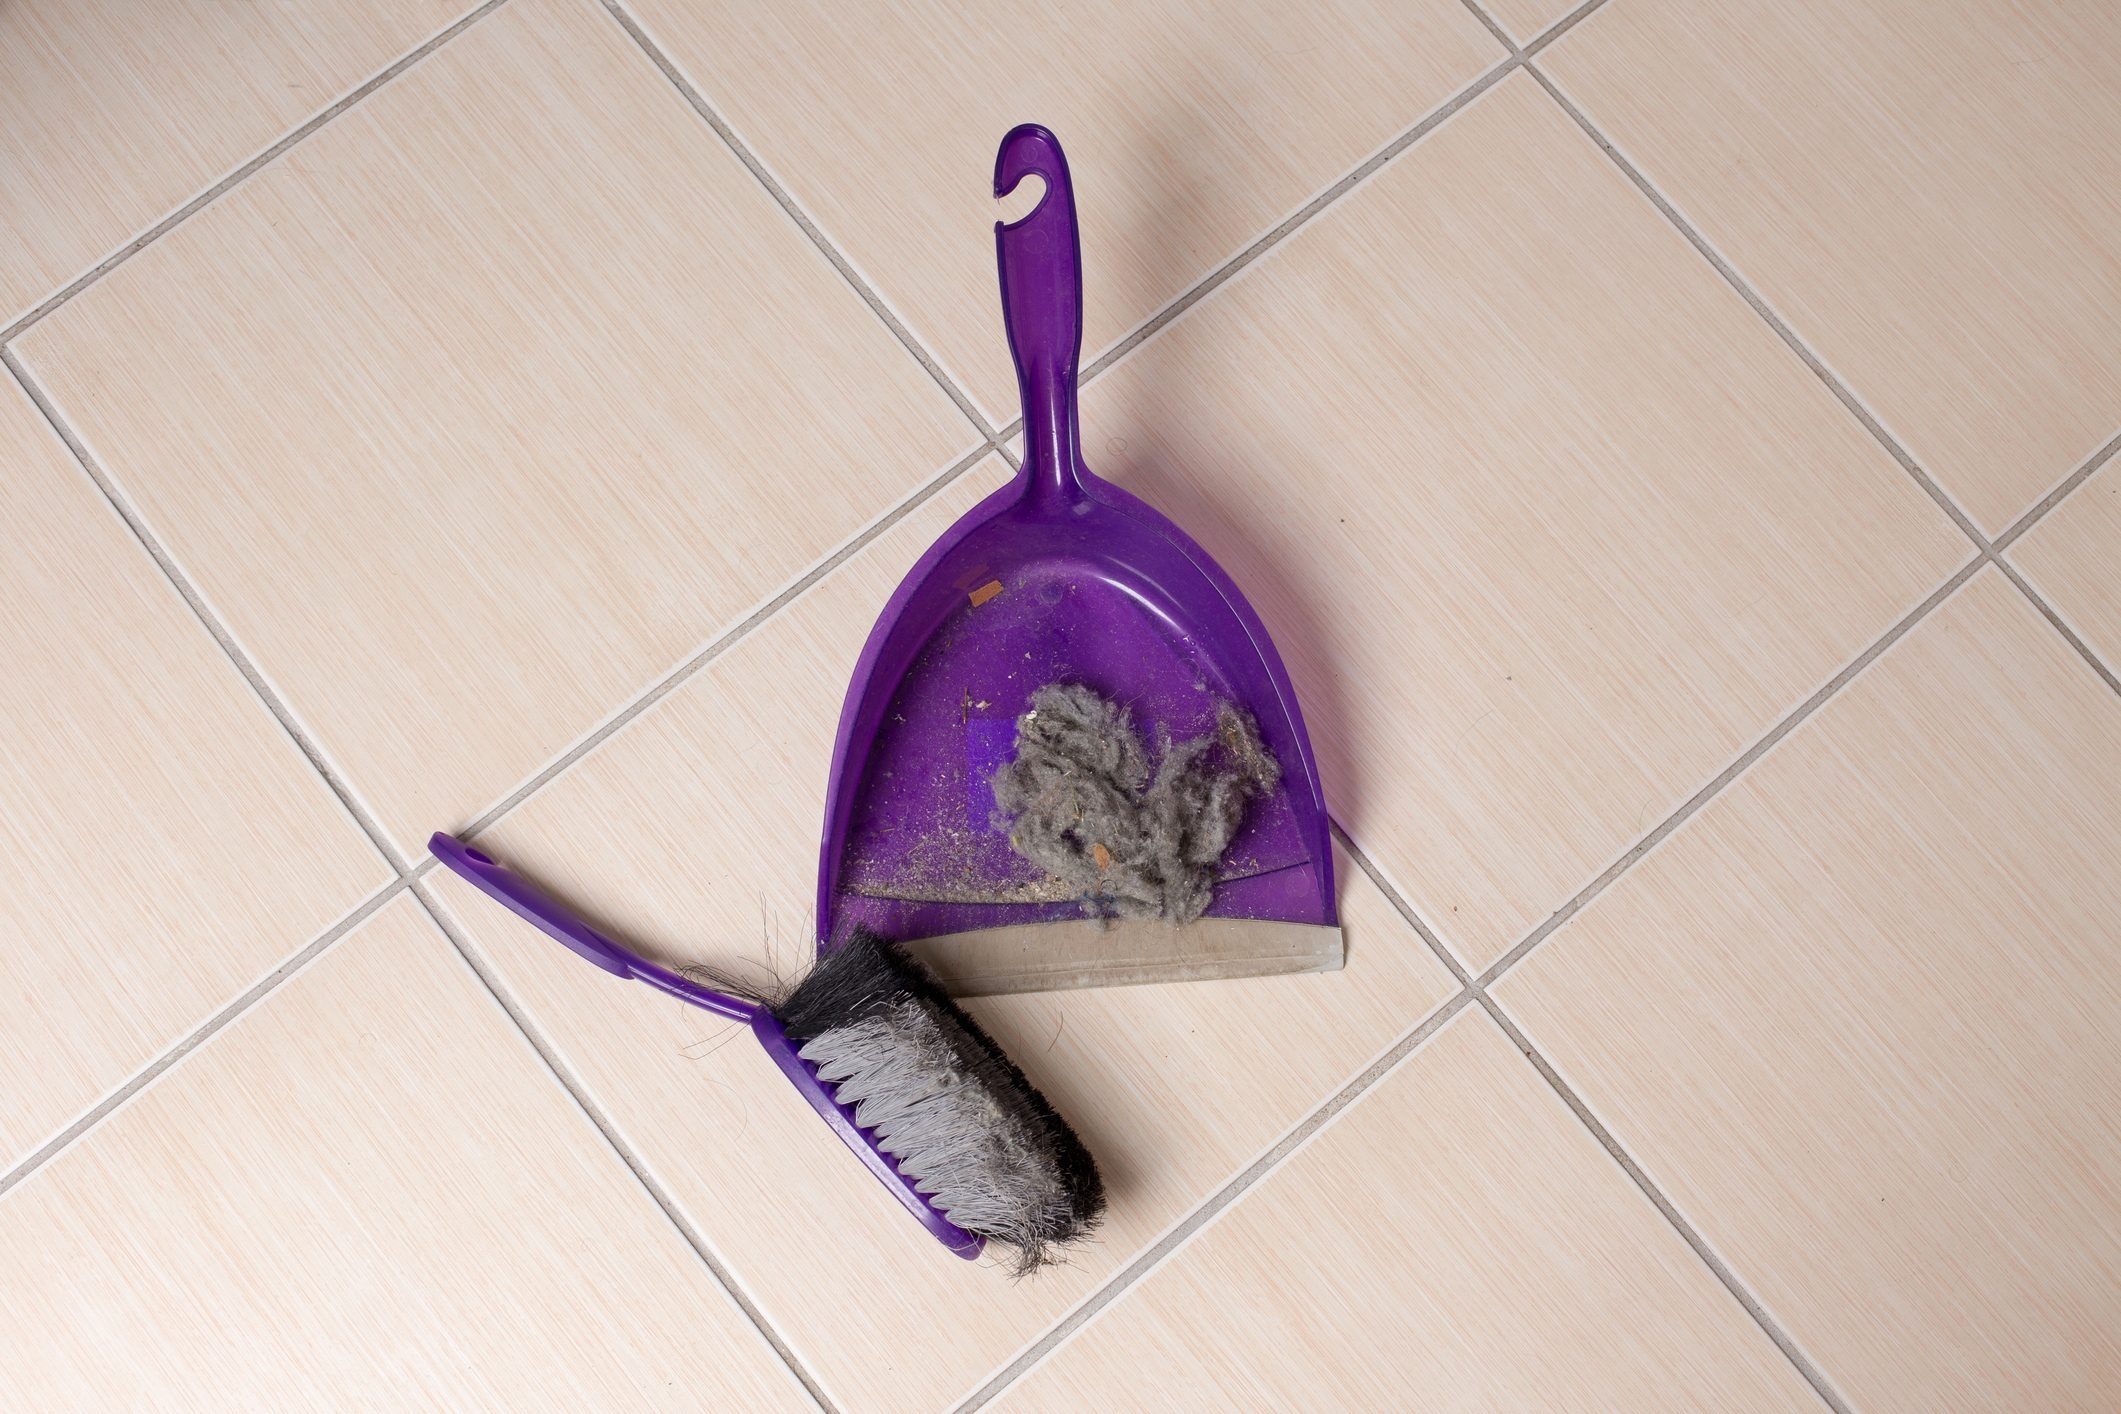 Dust pan and brush on tiled floor